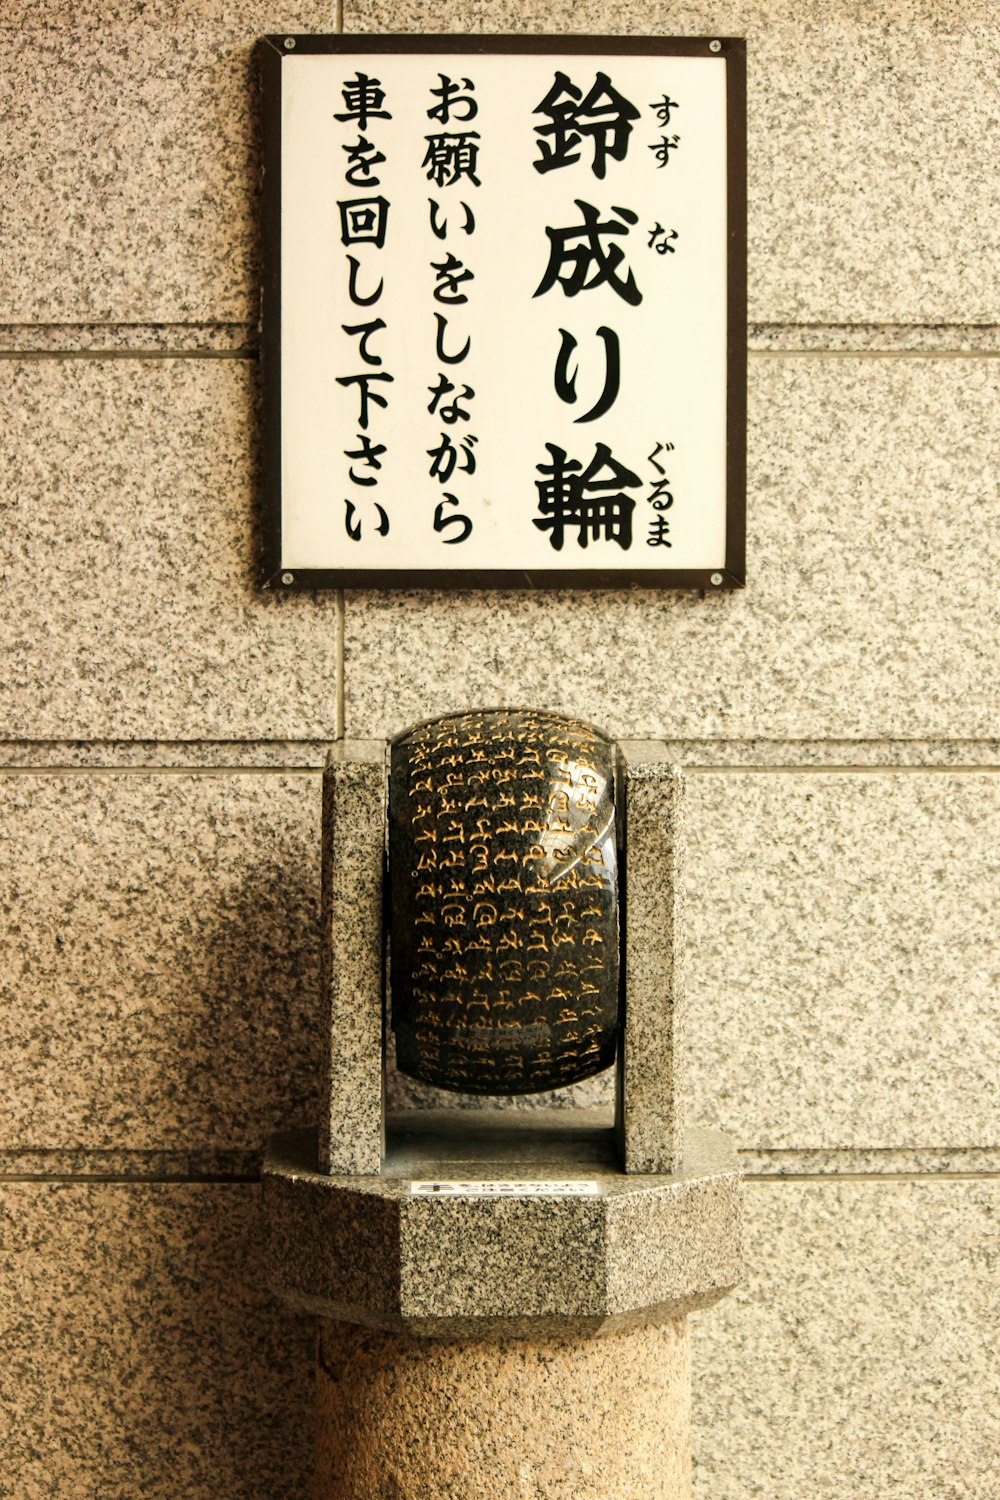 texto kanji na parede branca